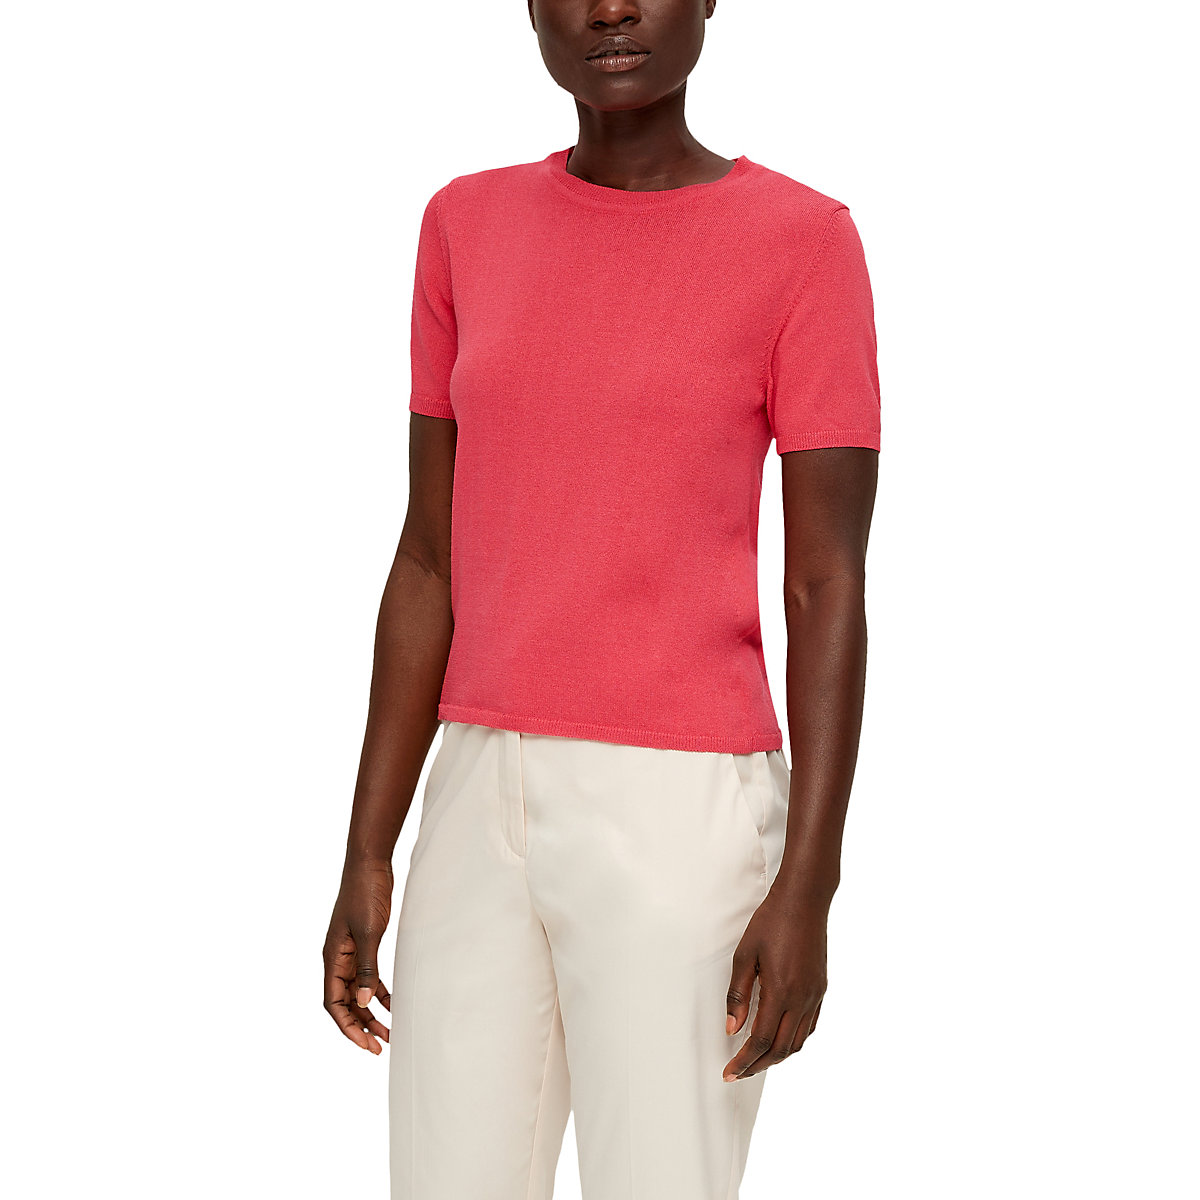 s.Oliver BLACK LABEL Pullover mit halblangen Ärmeln Pullover pink